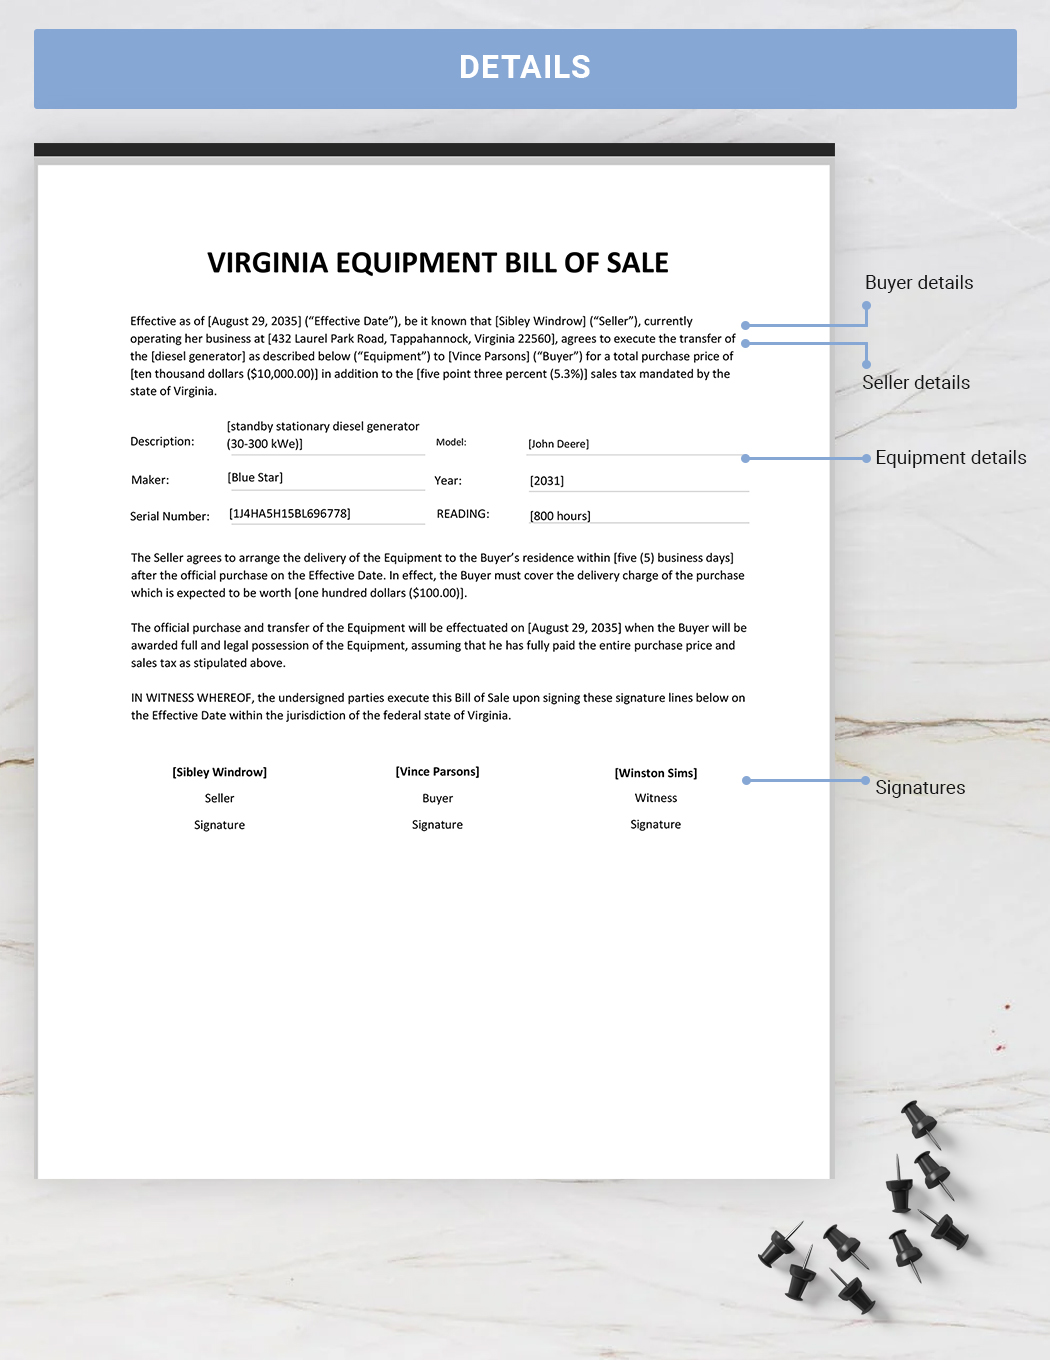 Virginia Equipment Bill of Sale Template